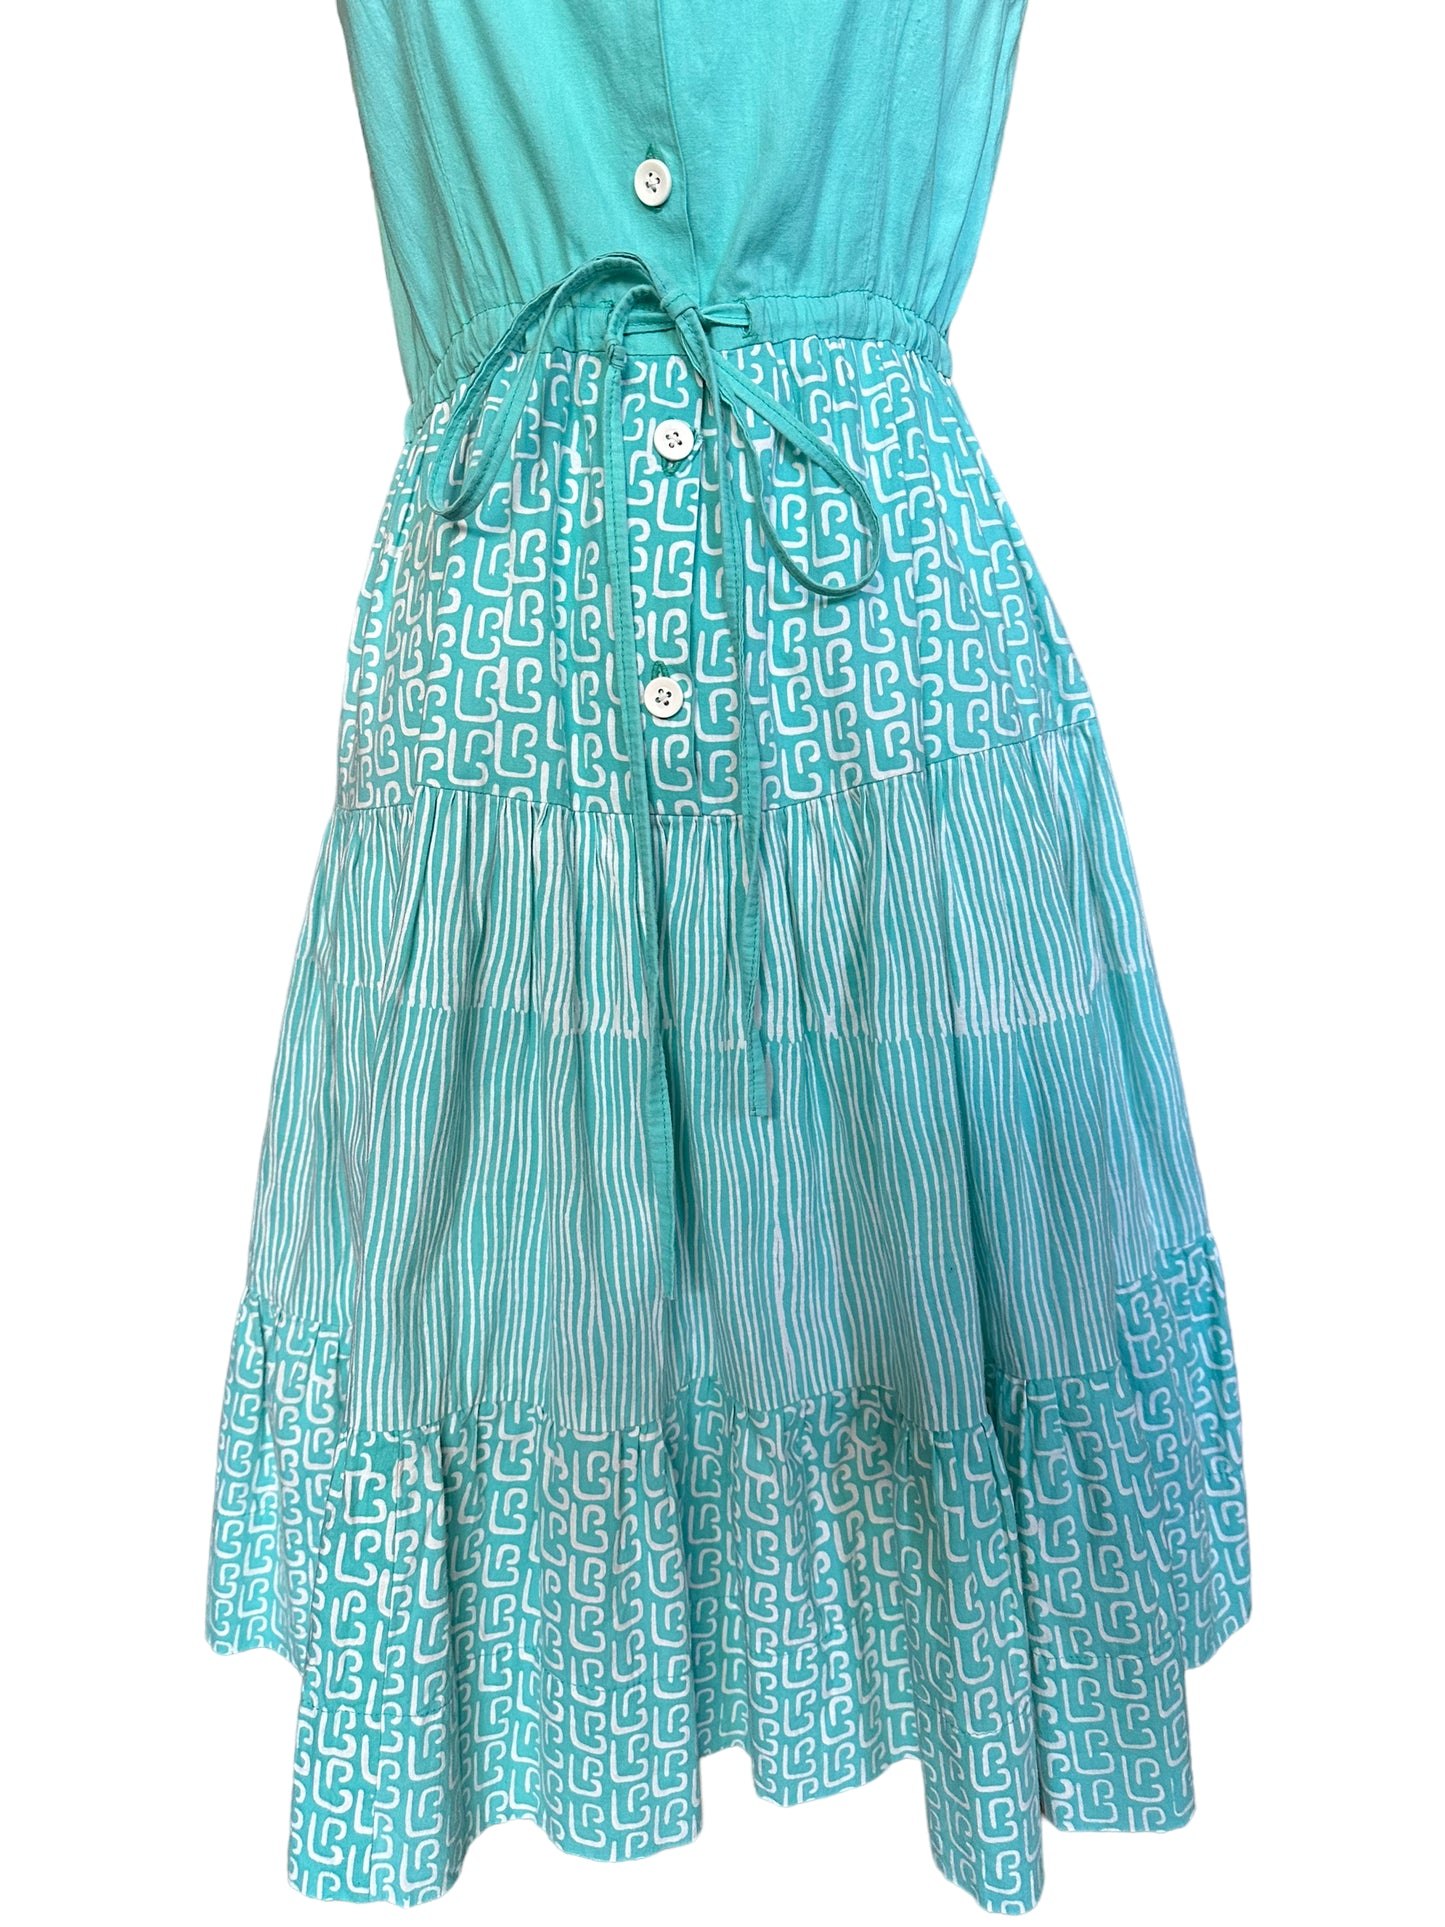 Front skirt view of Vintage 1950s Cute Summer Dress | Barn Owl Vintage | Seattle Summer Dresses